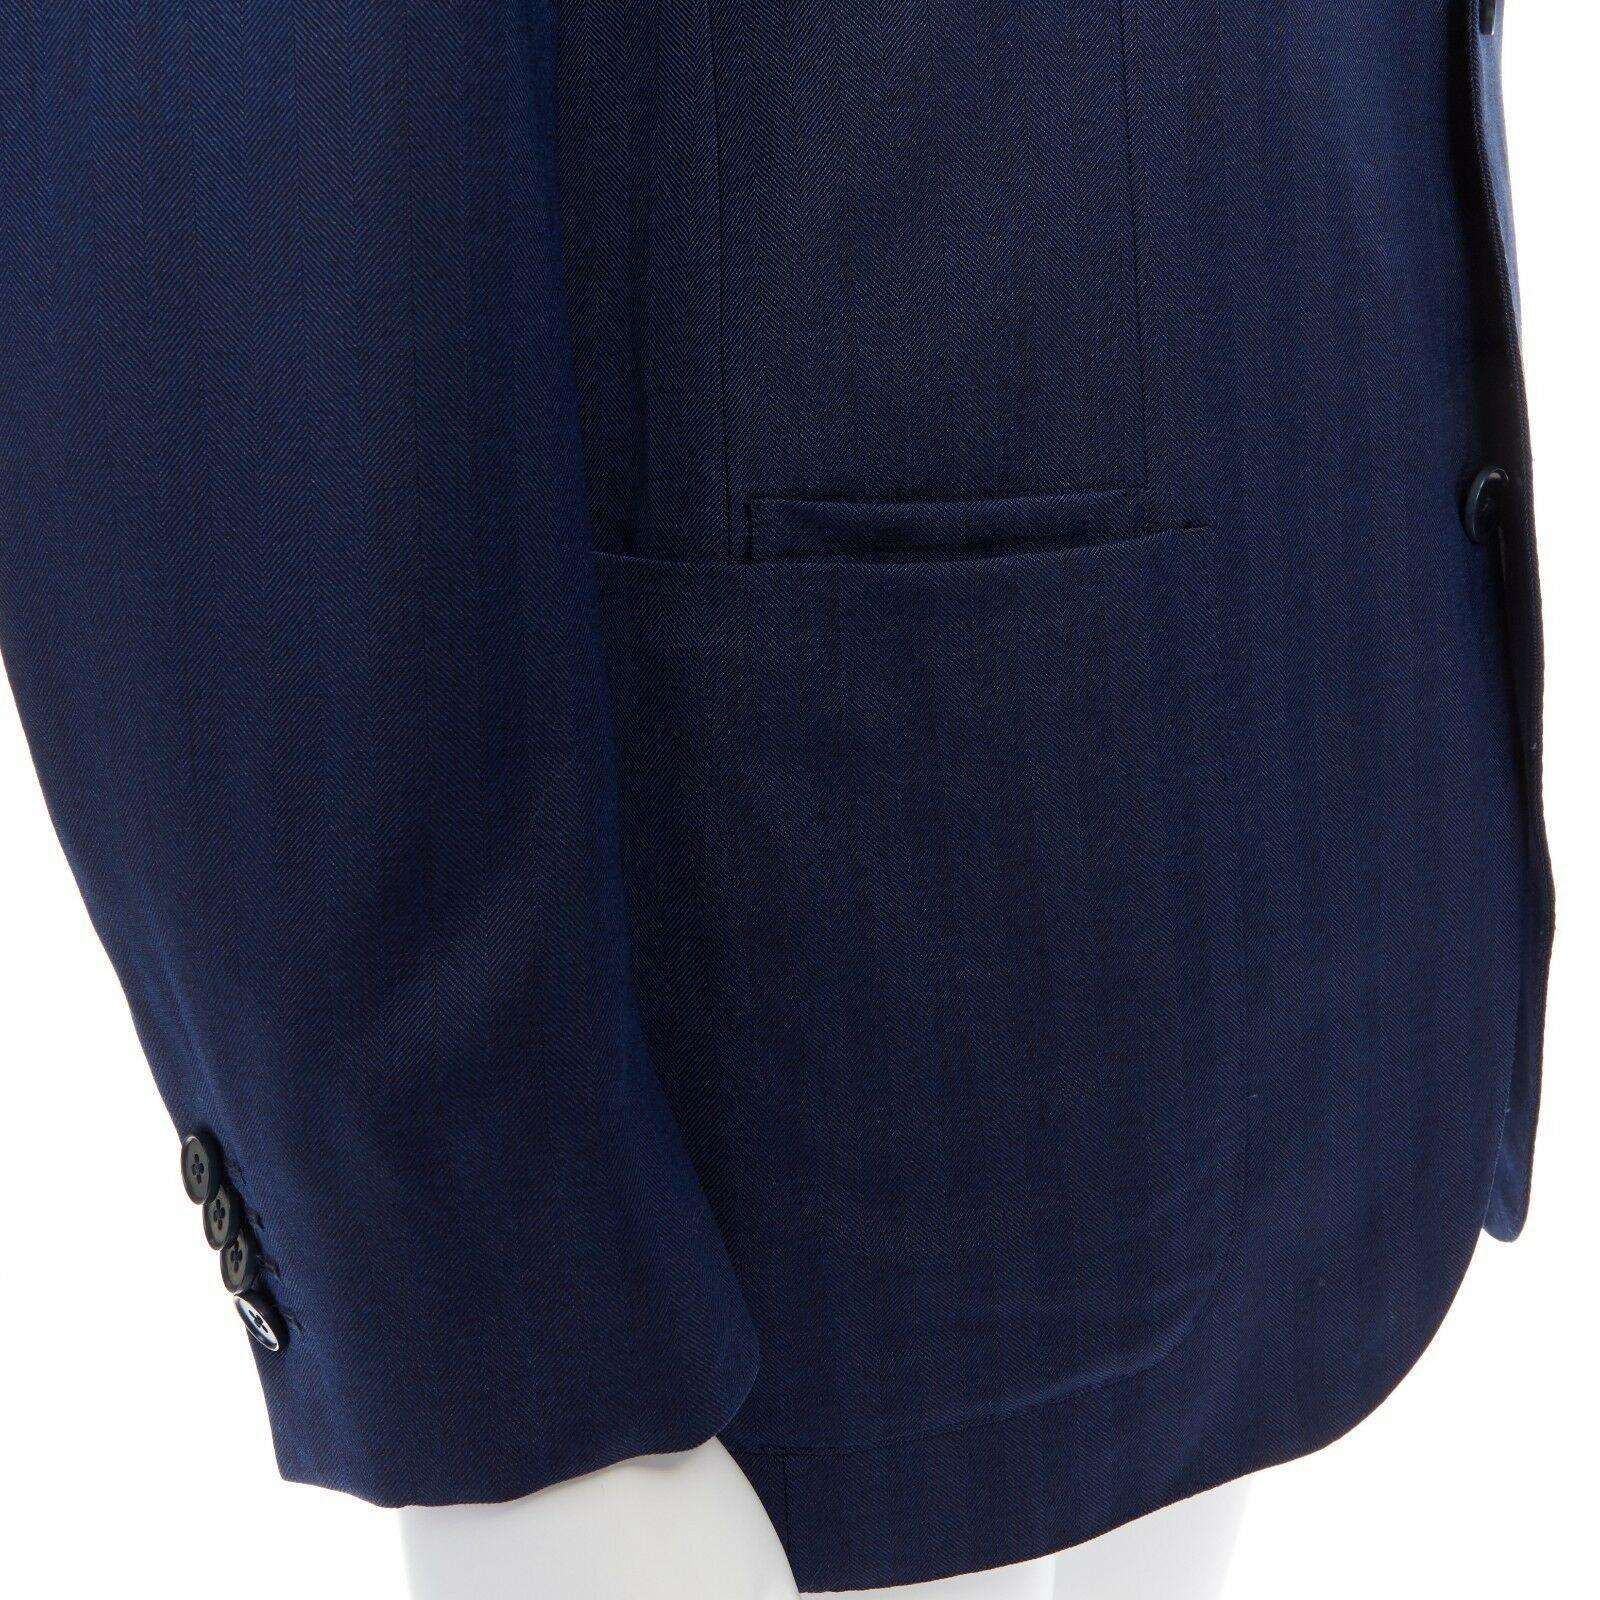 ERMENEGILDO ZEGNA 10 pocket jacket blue wool silk travel blazer jacket 50R L 1